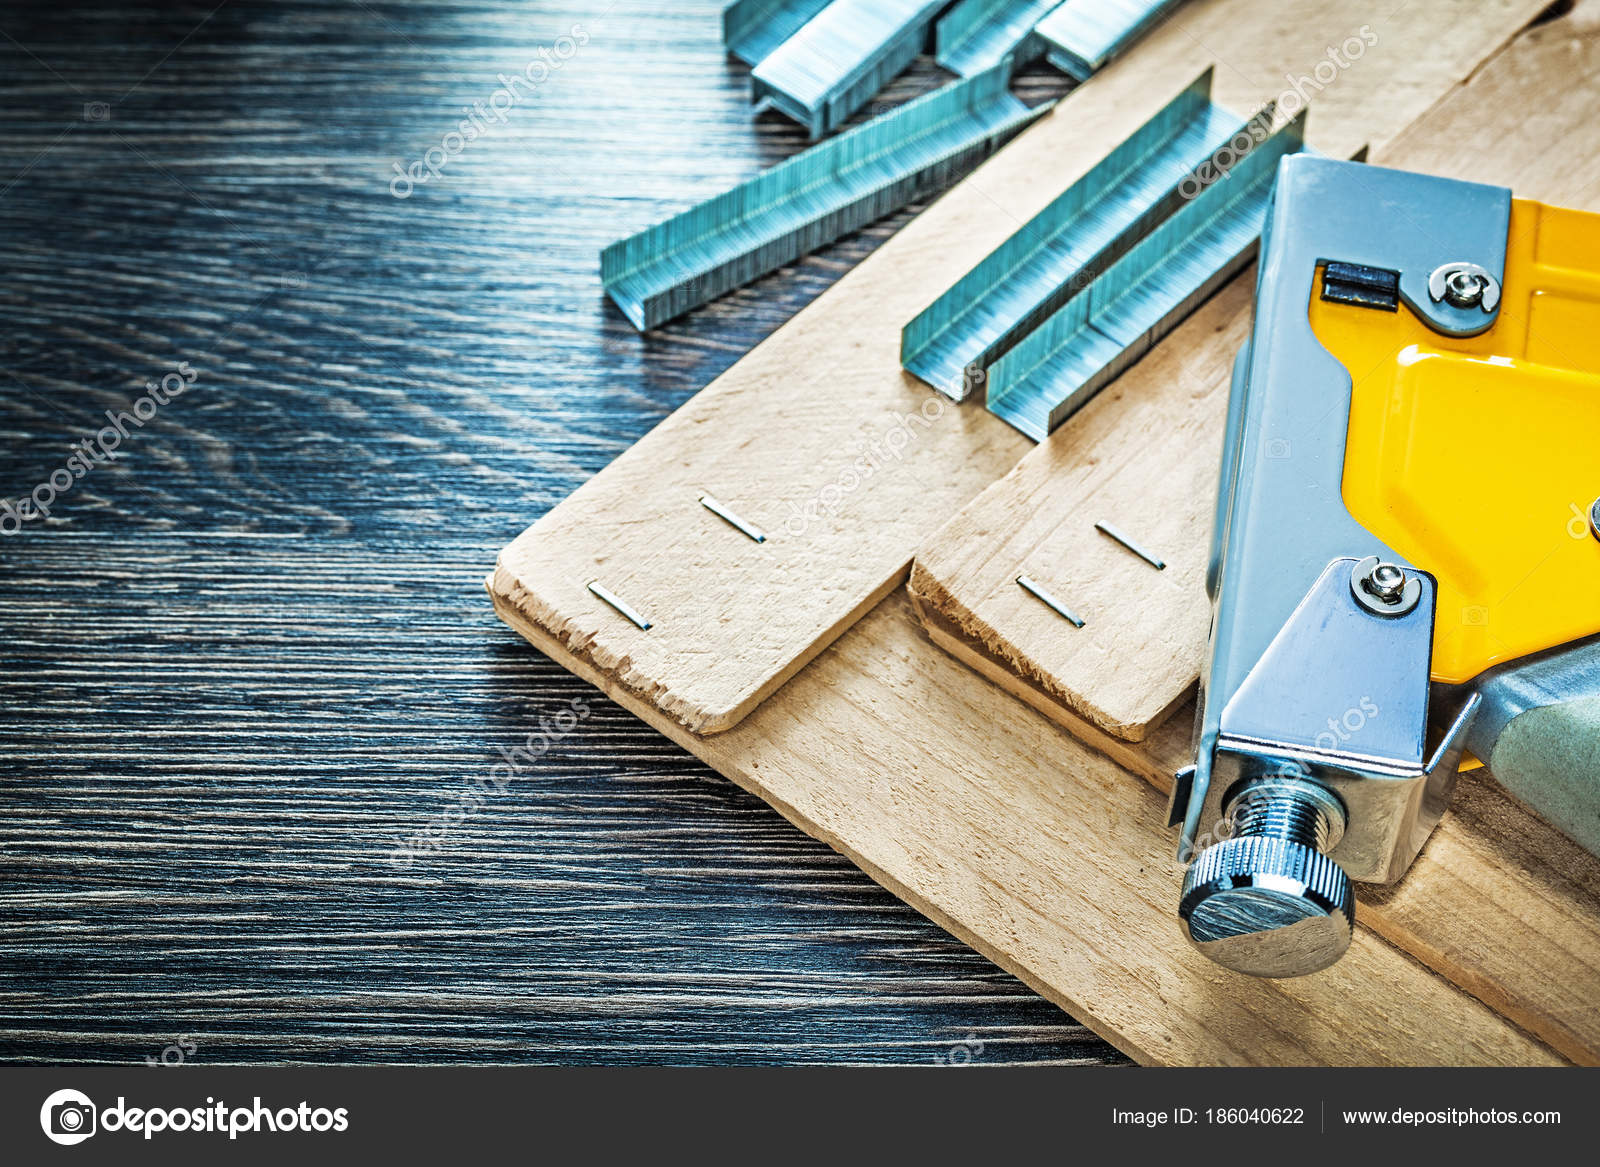 Carpenter Using an Industrial Construction Stapler on a Wood Plank